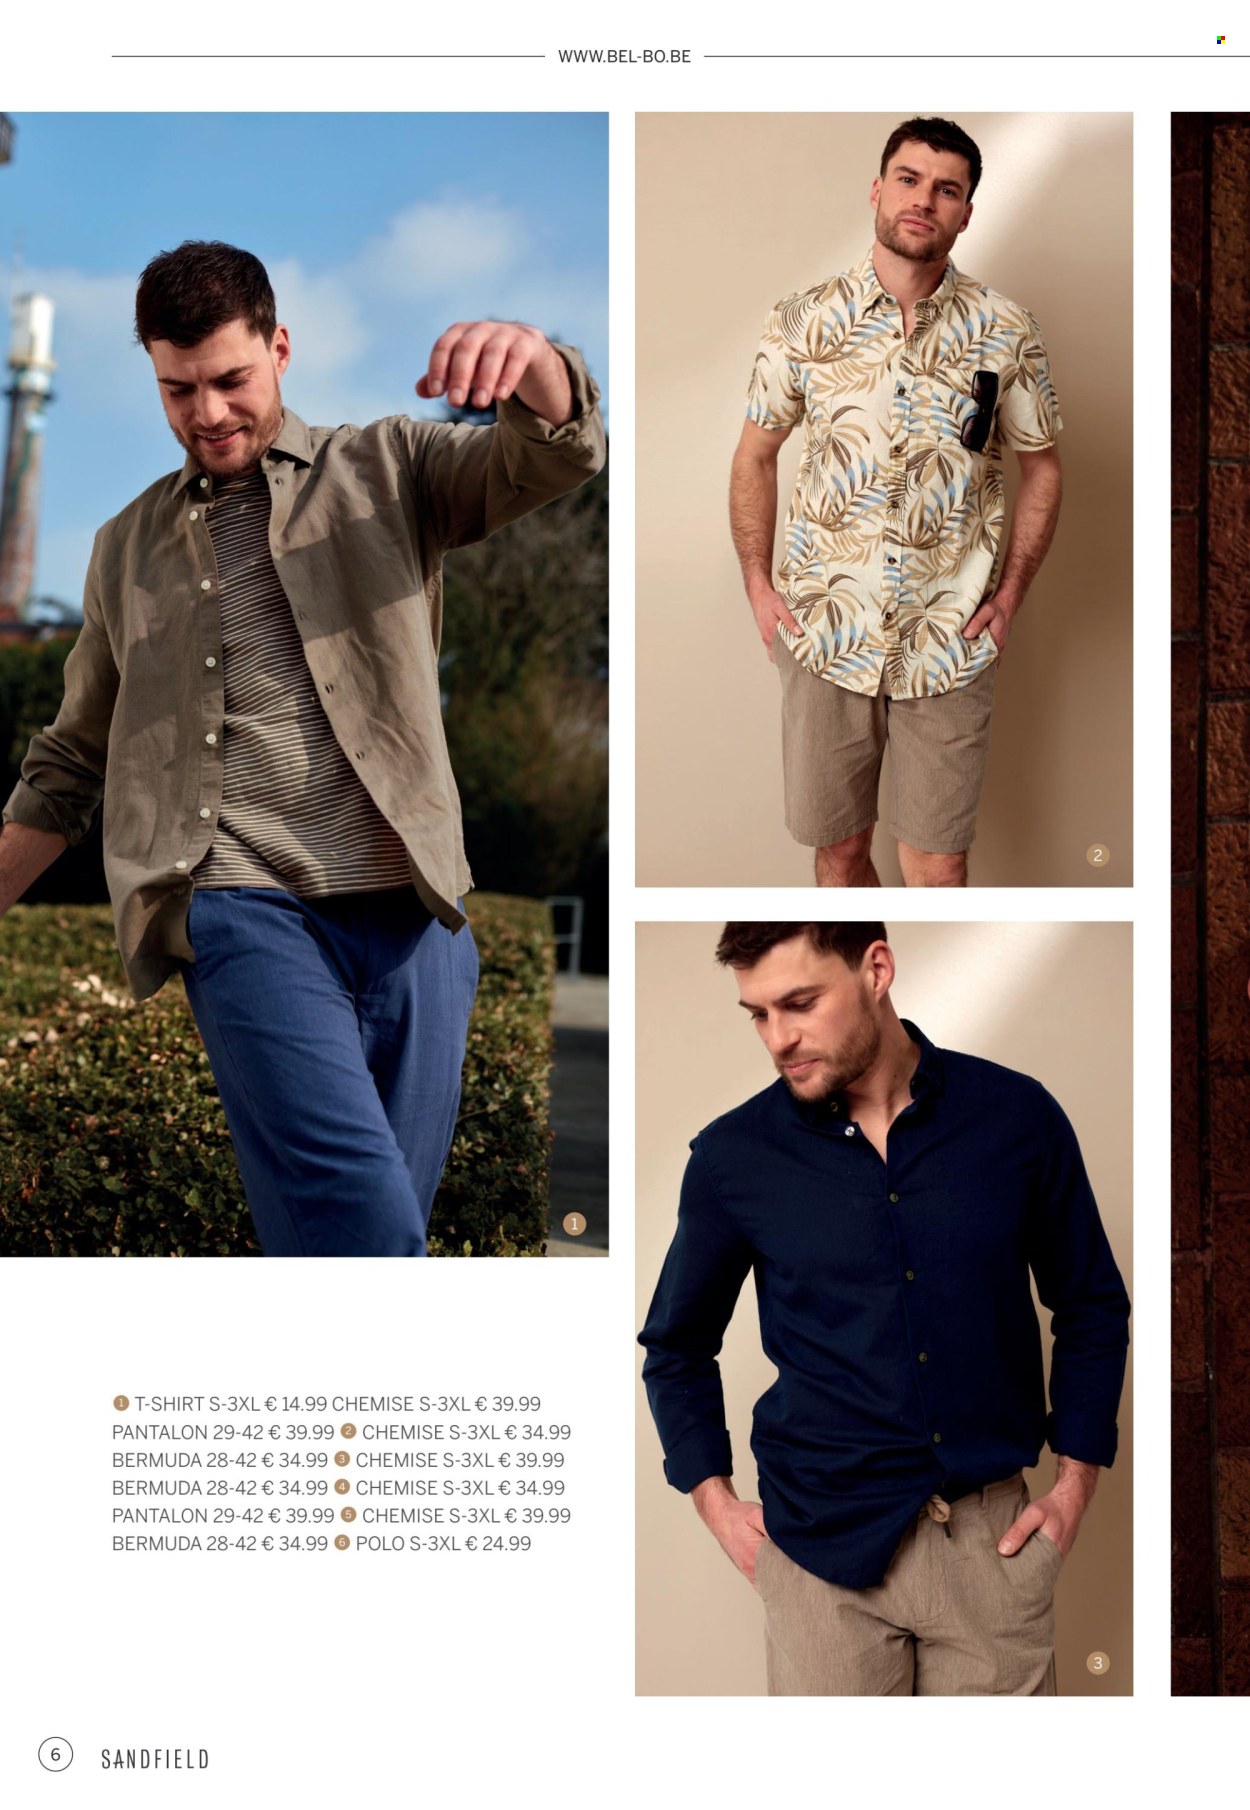 thumbnail - Catalogue Bel&Bo - Produits soldés - pantalon, chemise, t-shirt. Page 6.